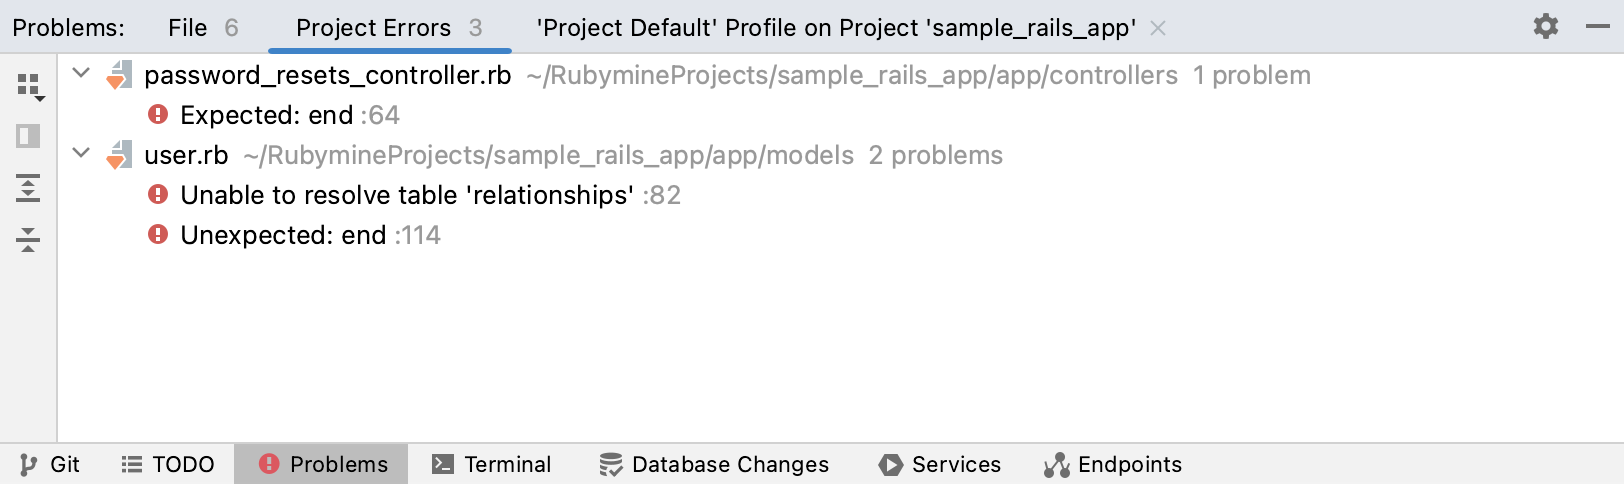 Project Errors tab